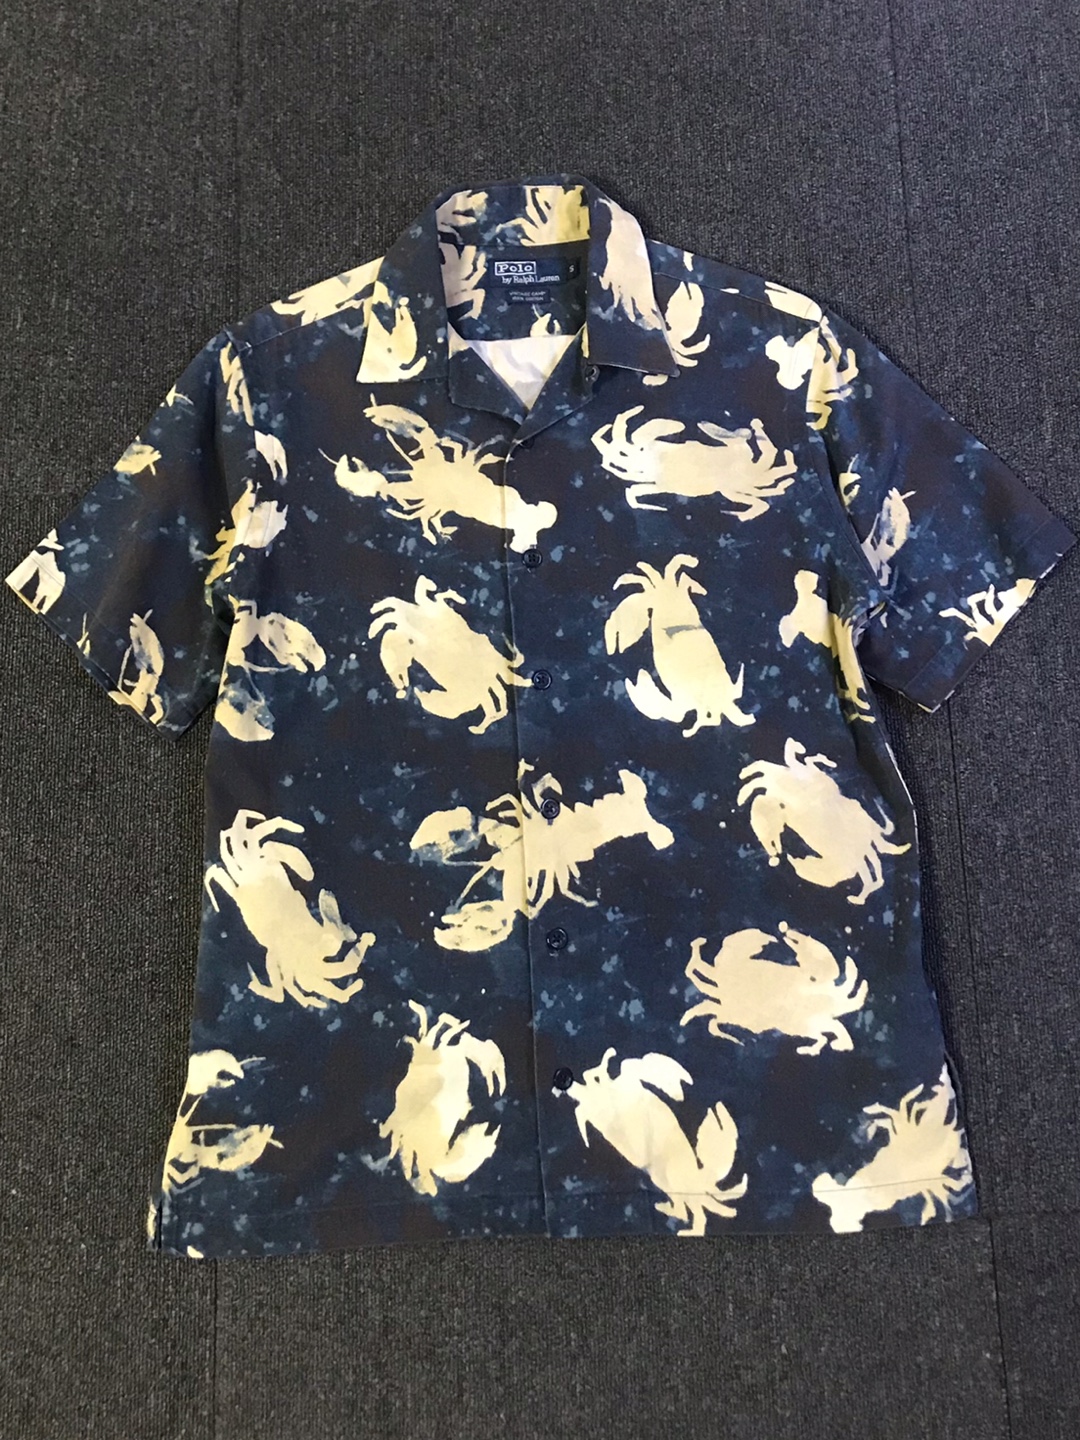 Polo RL vintage camp collar shirt (S size, ~100 추천)